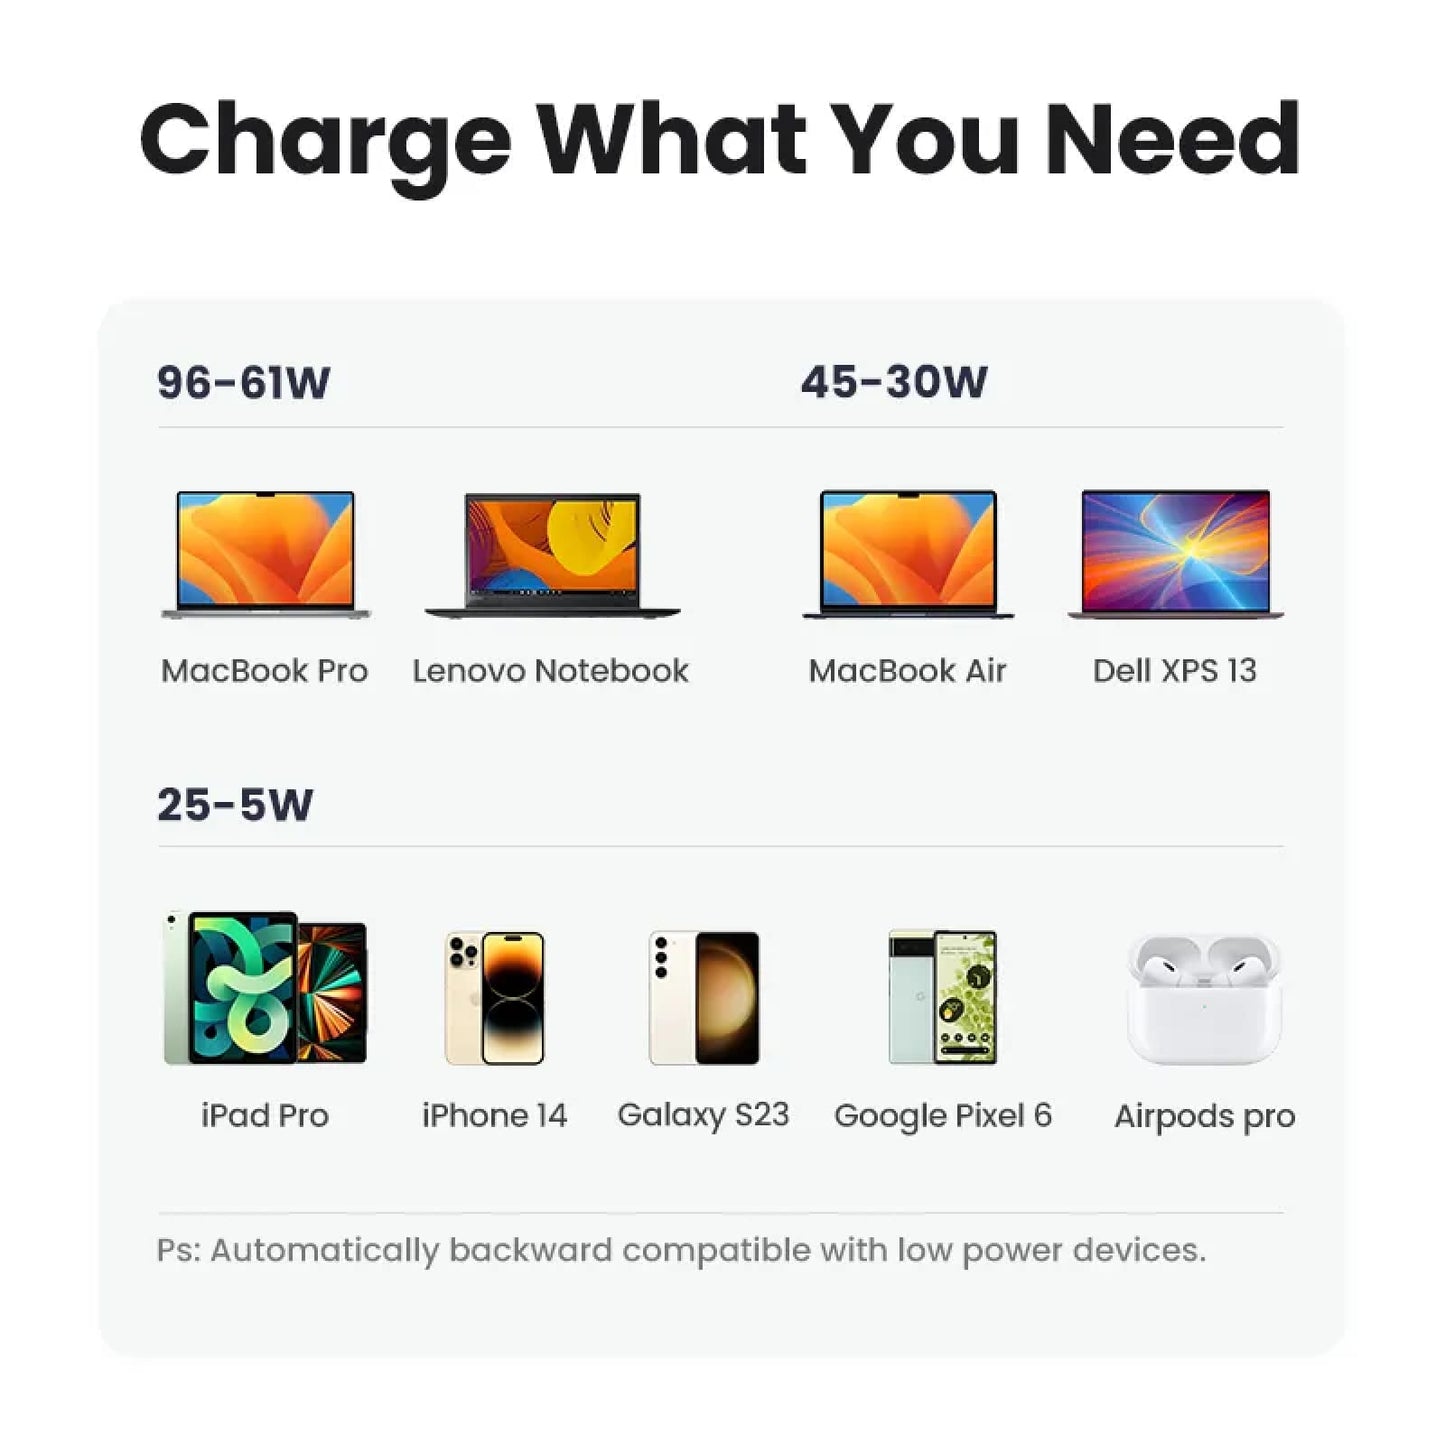 Ugreen 100W Gan Usb Charger Fast Charging Type C Pd Macbook Iphone 15 14 Xiaomi 301635